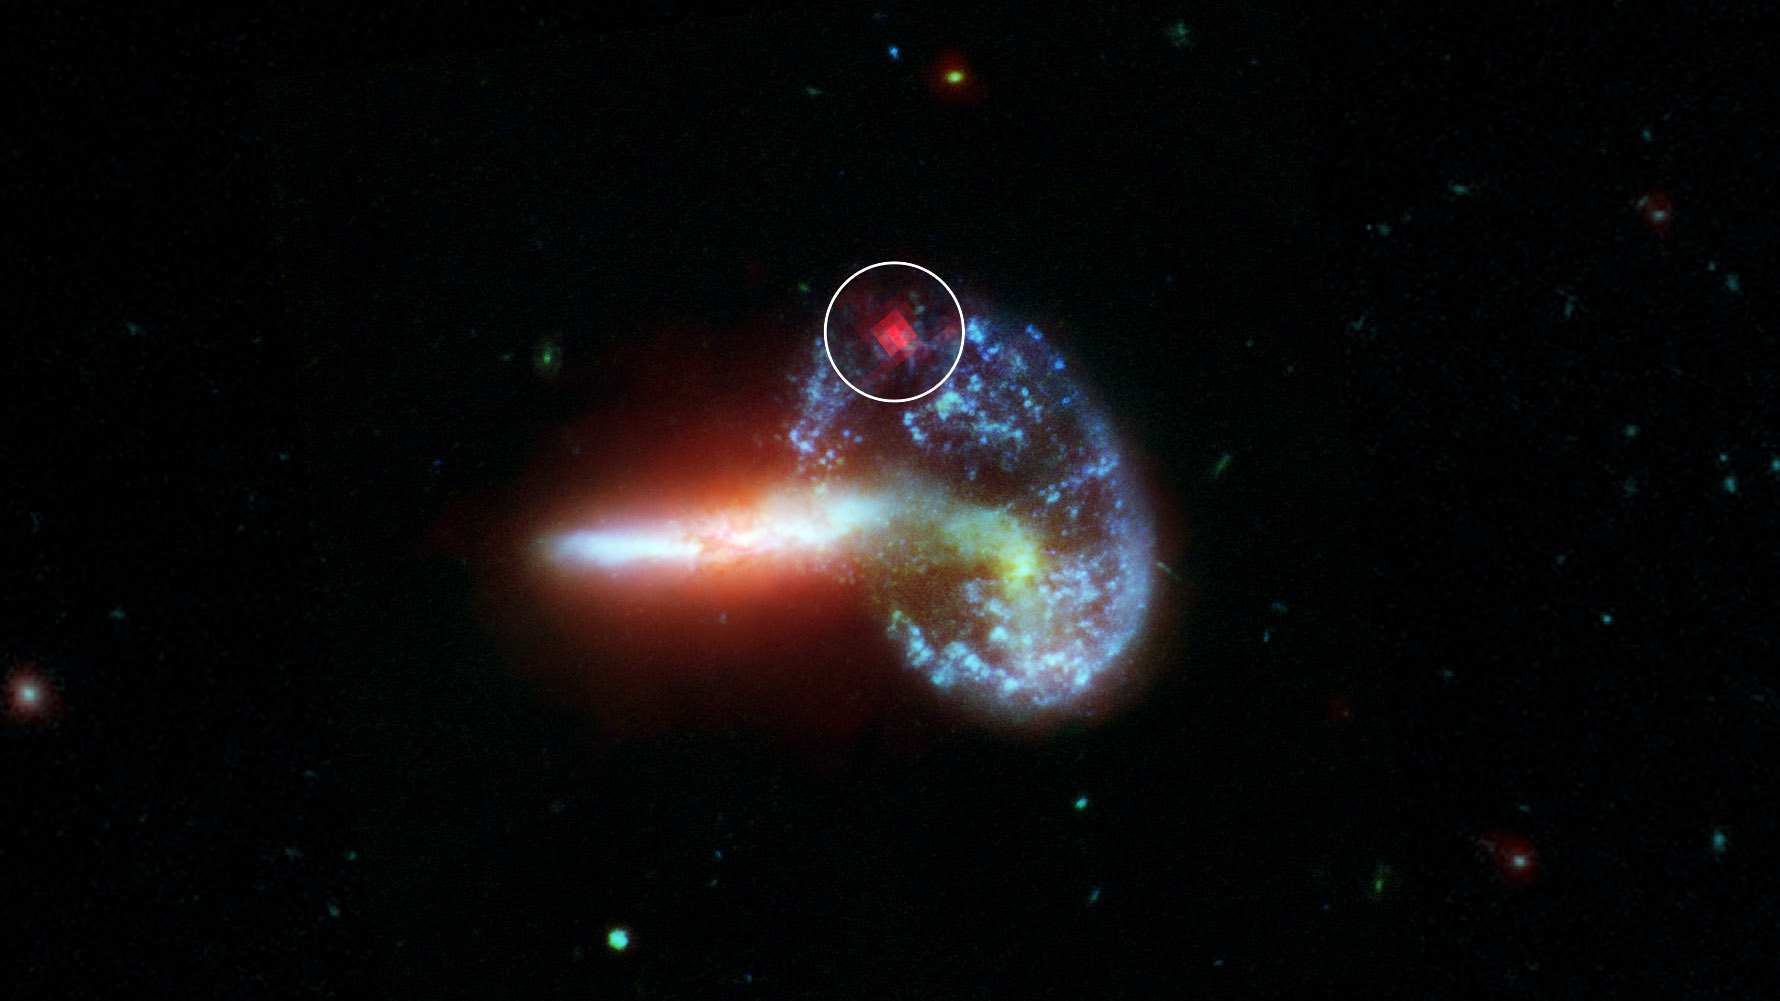 Galaxy Arp 148